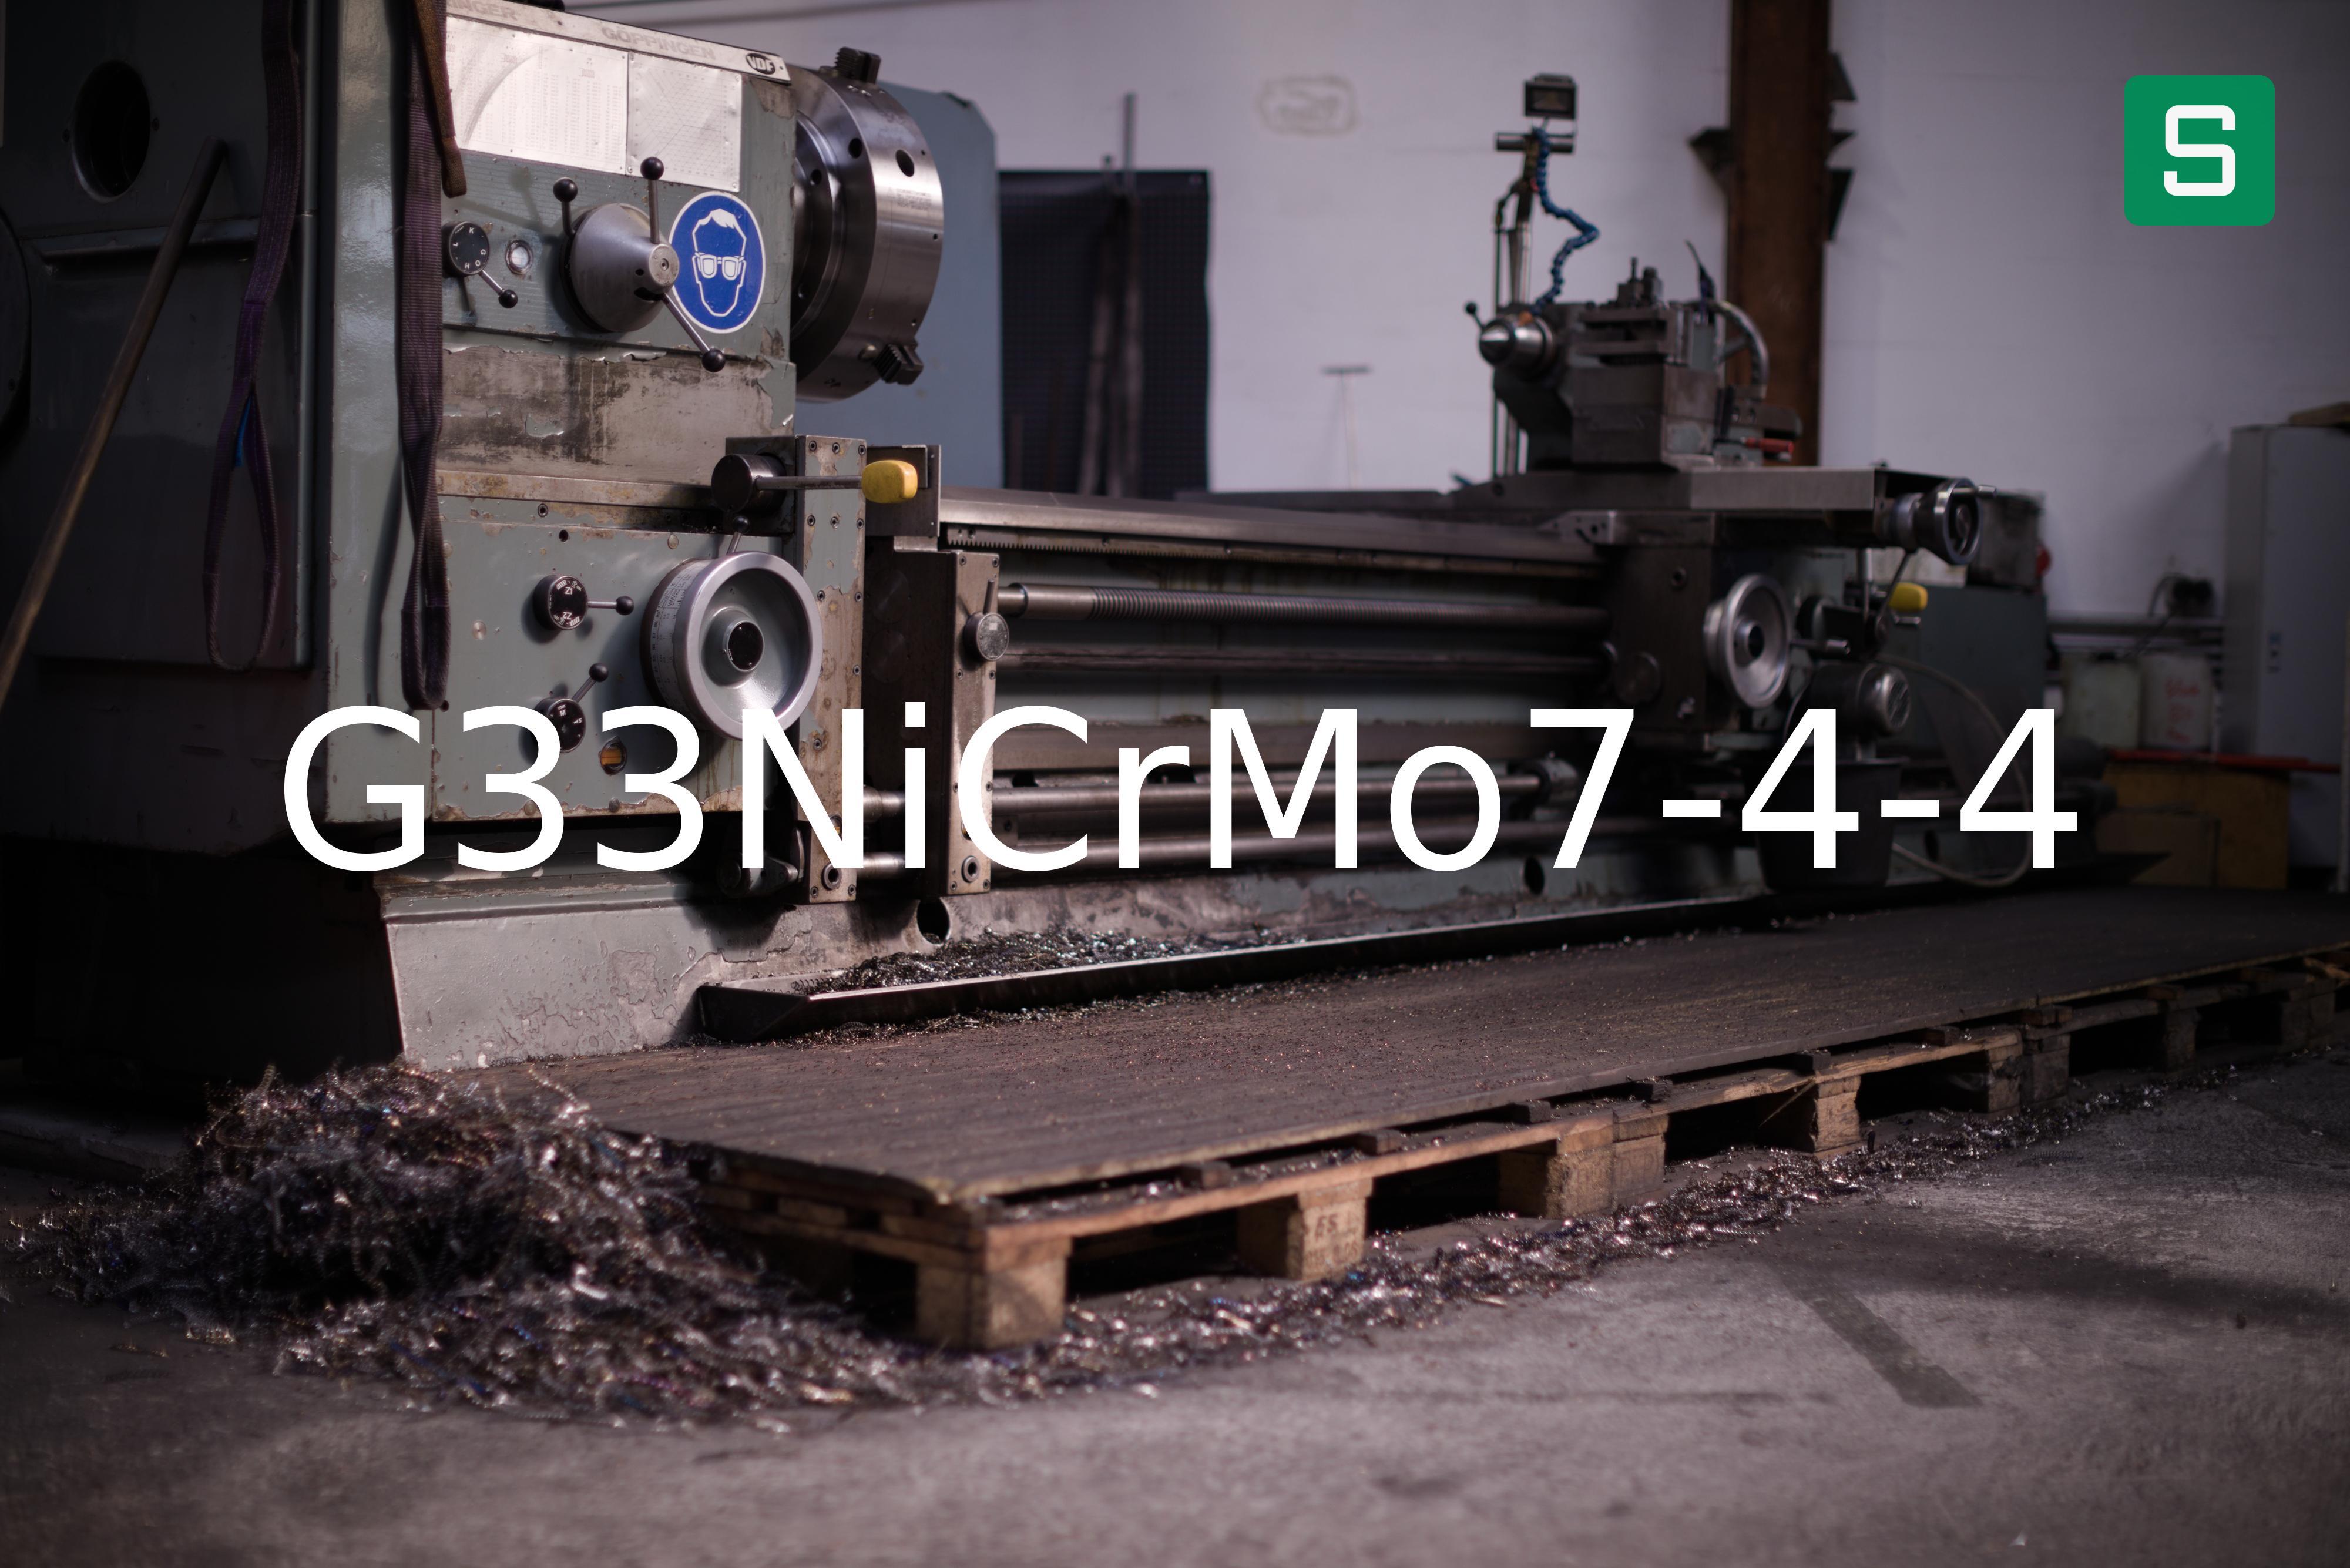 Steel Material: G33NiCrMo7-4-4